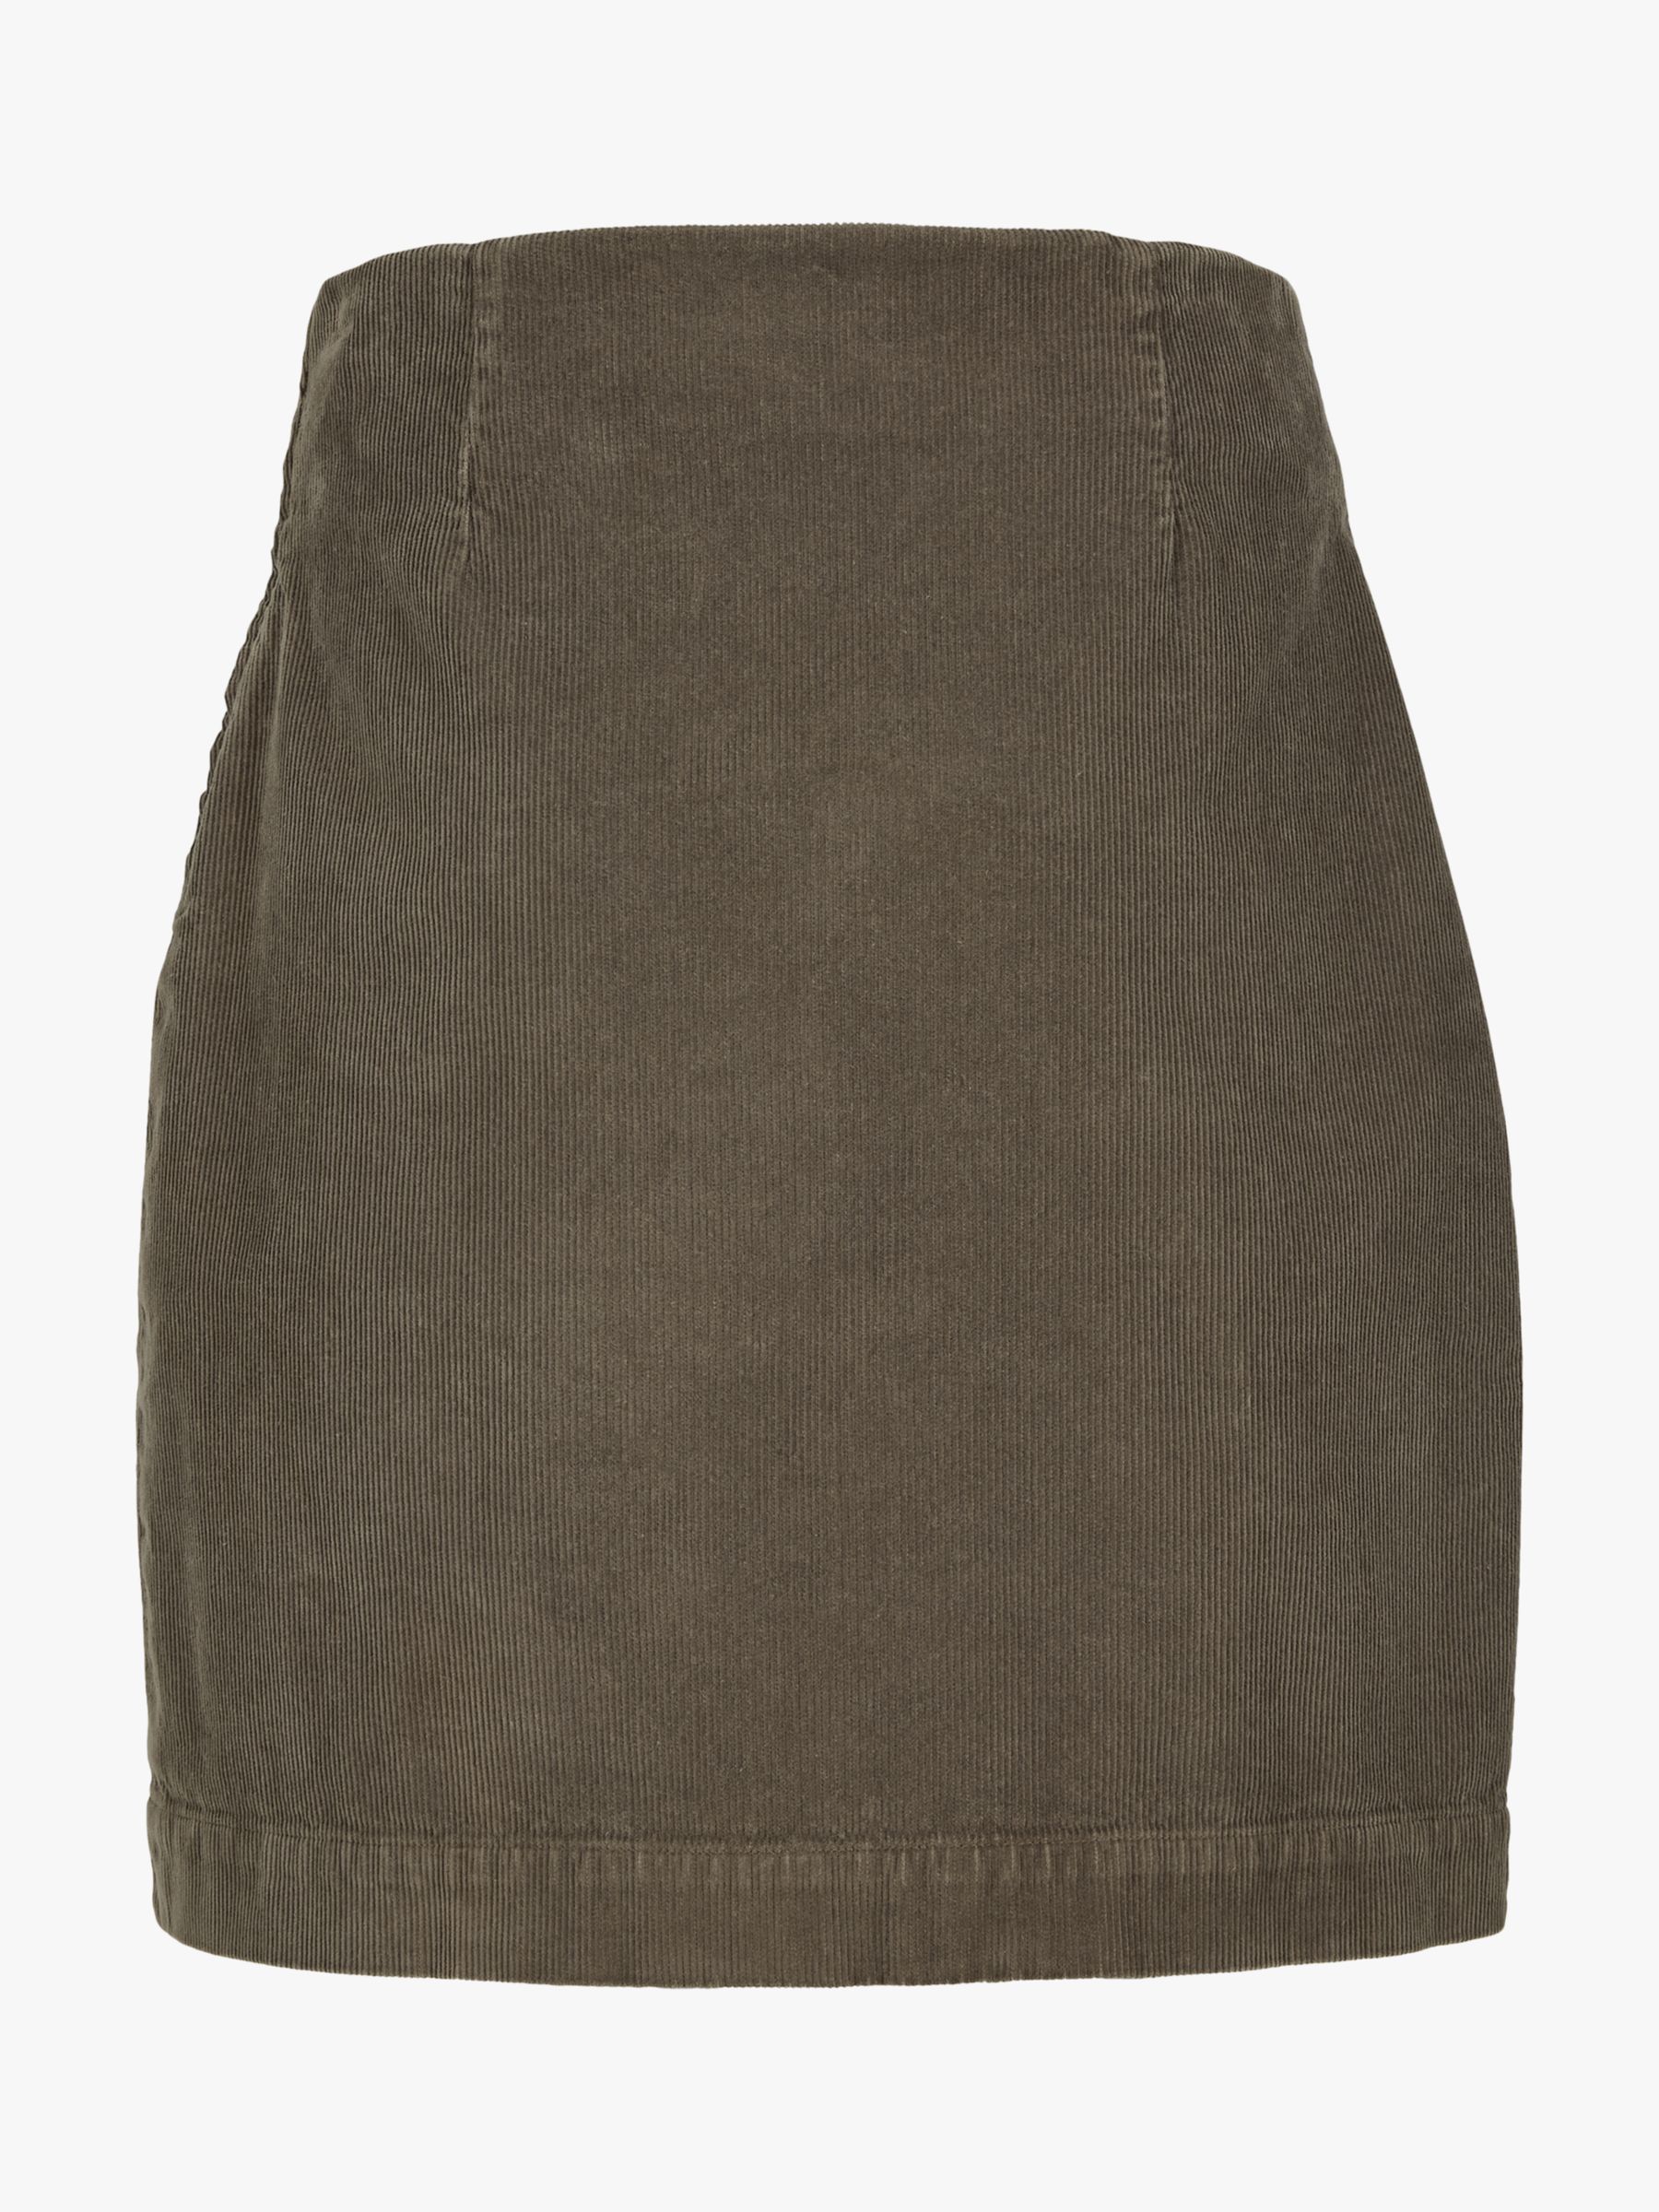 Celtic & Co. Cotton Corduroy Knee Length Skirt, Mushroom at John Lewis ...